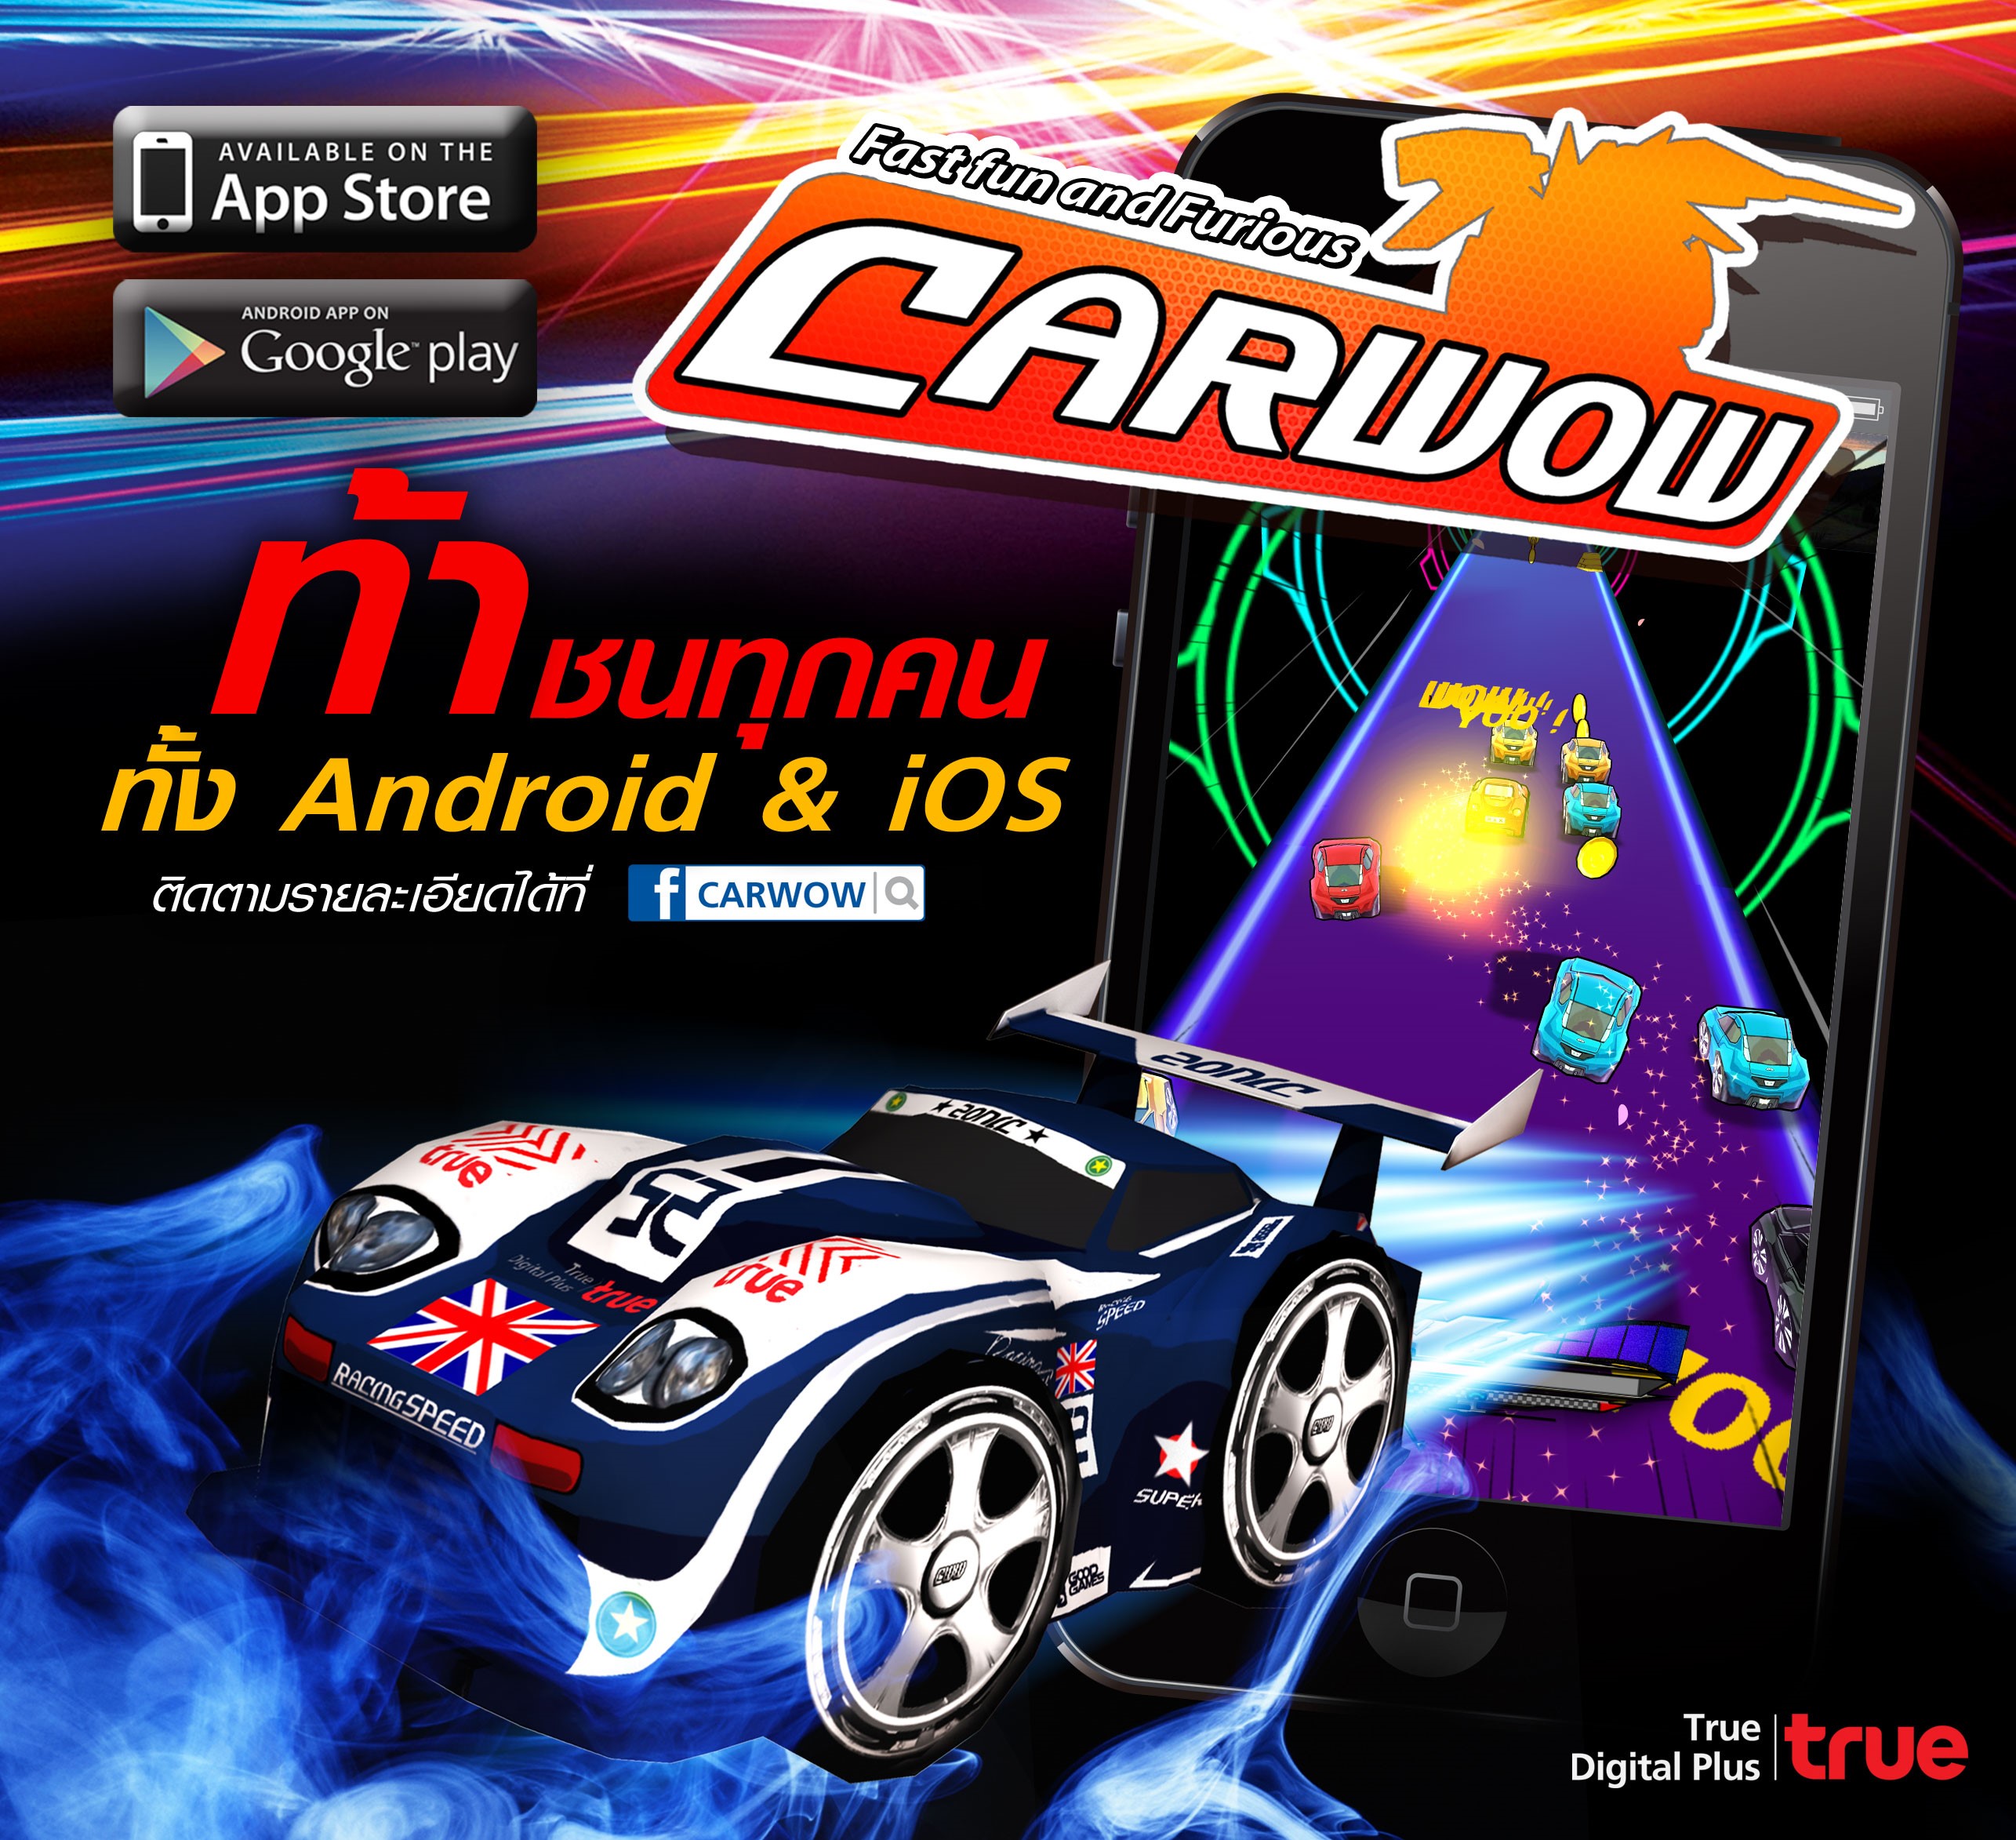 Car wow “Mobile Social Game” 7